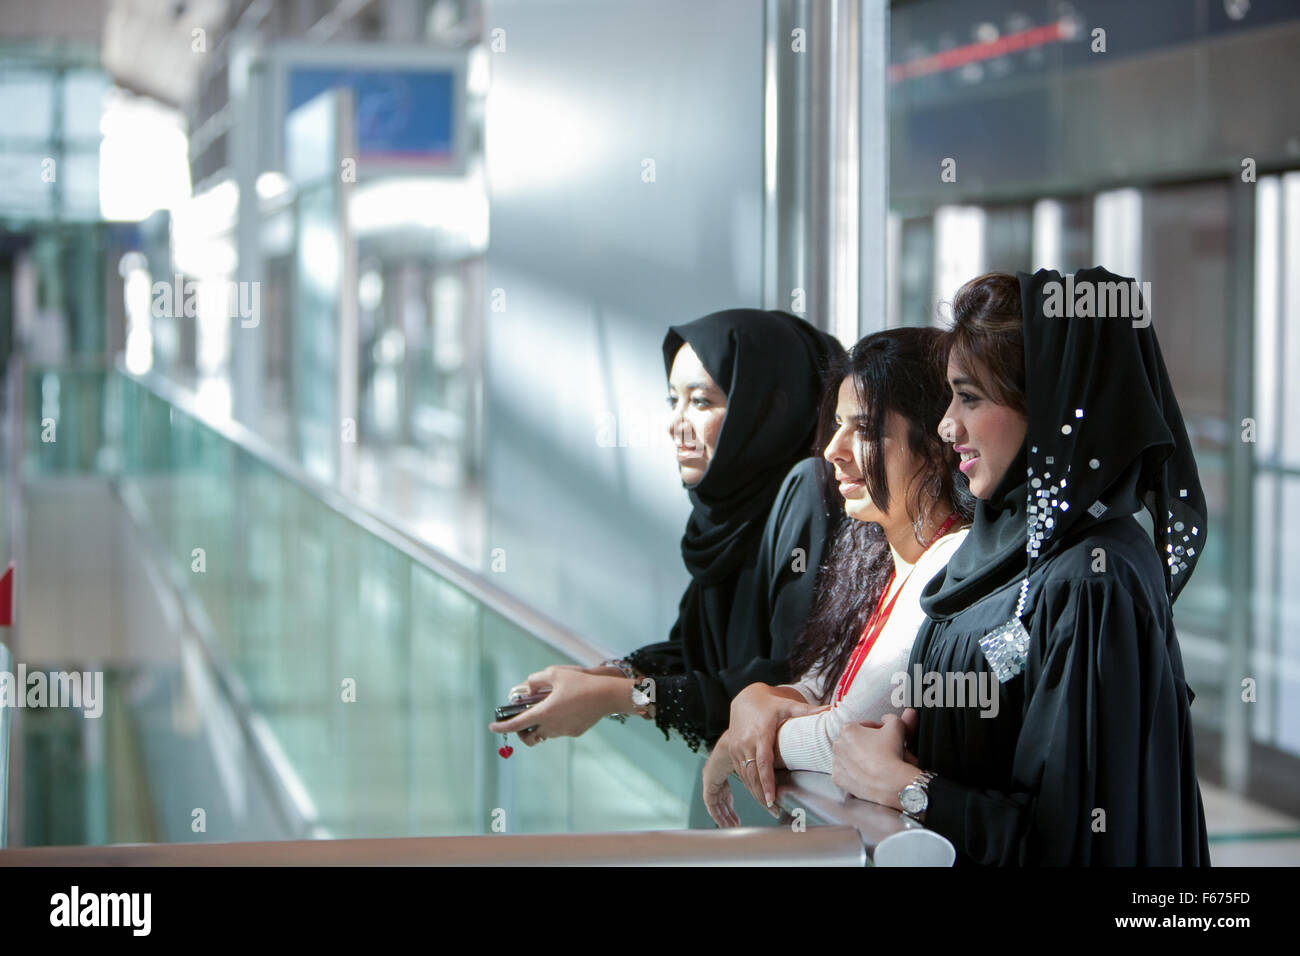 3 Arab ladies chatting on platform of the Dubai Metro Stock Photo